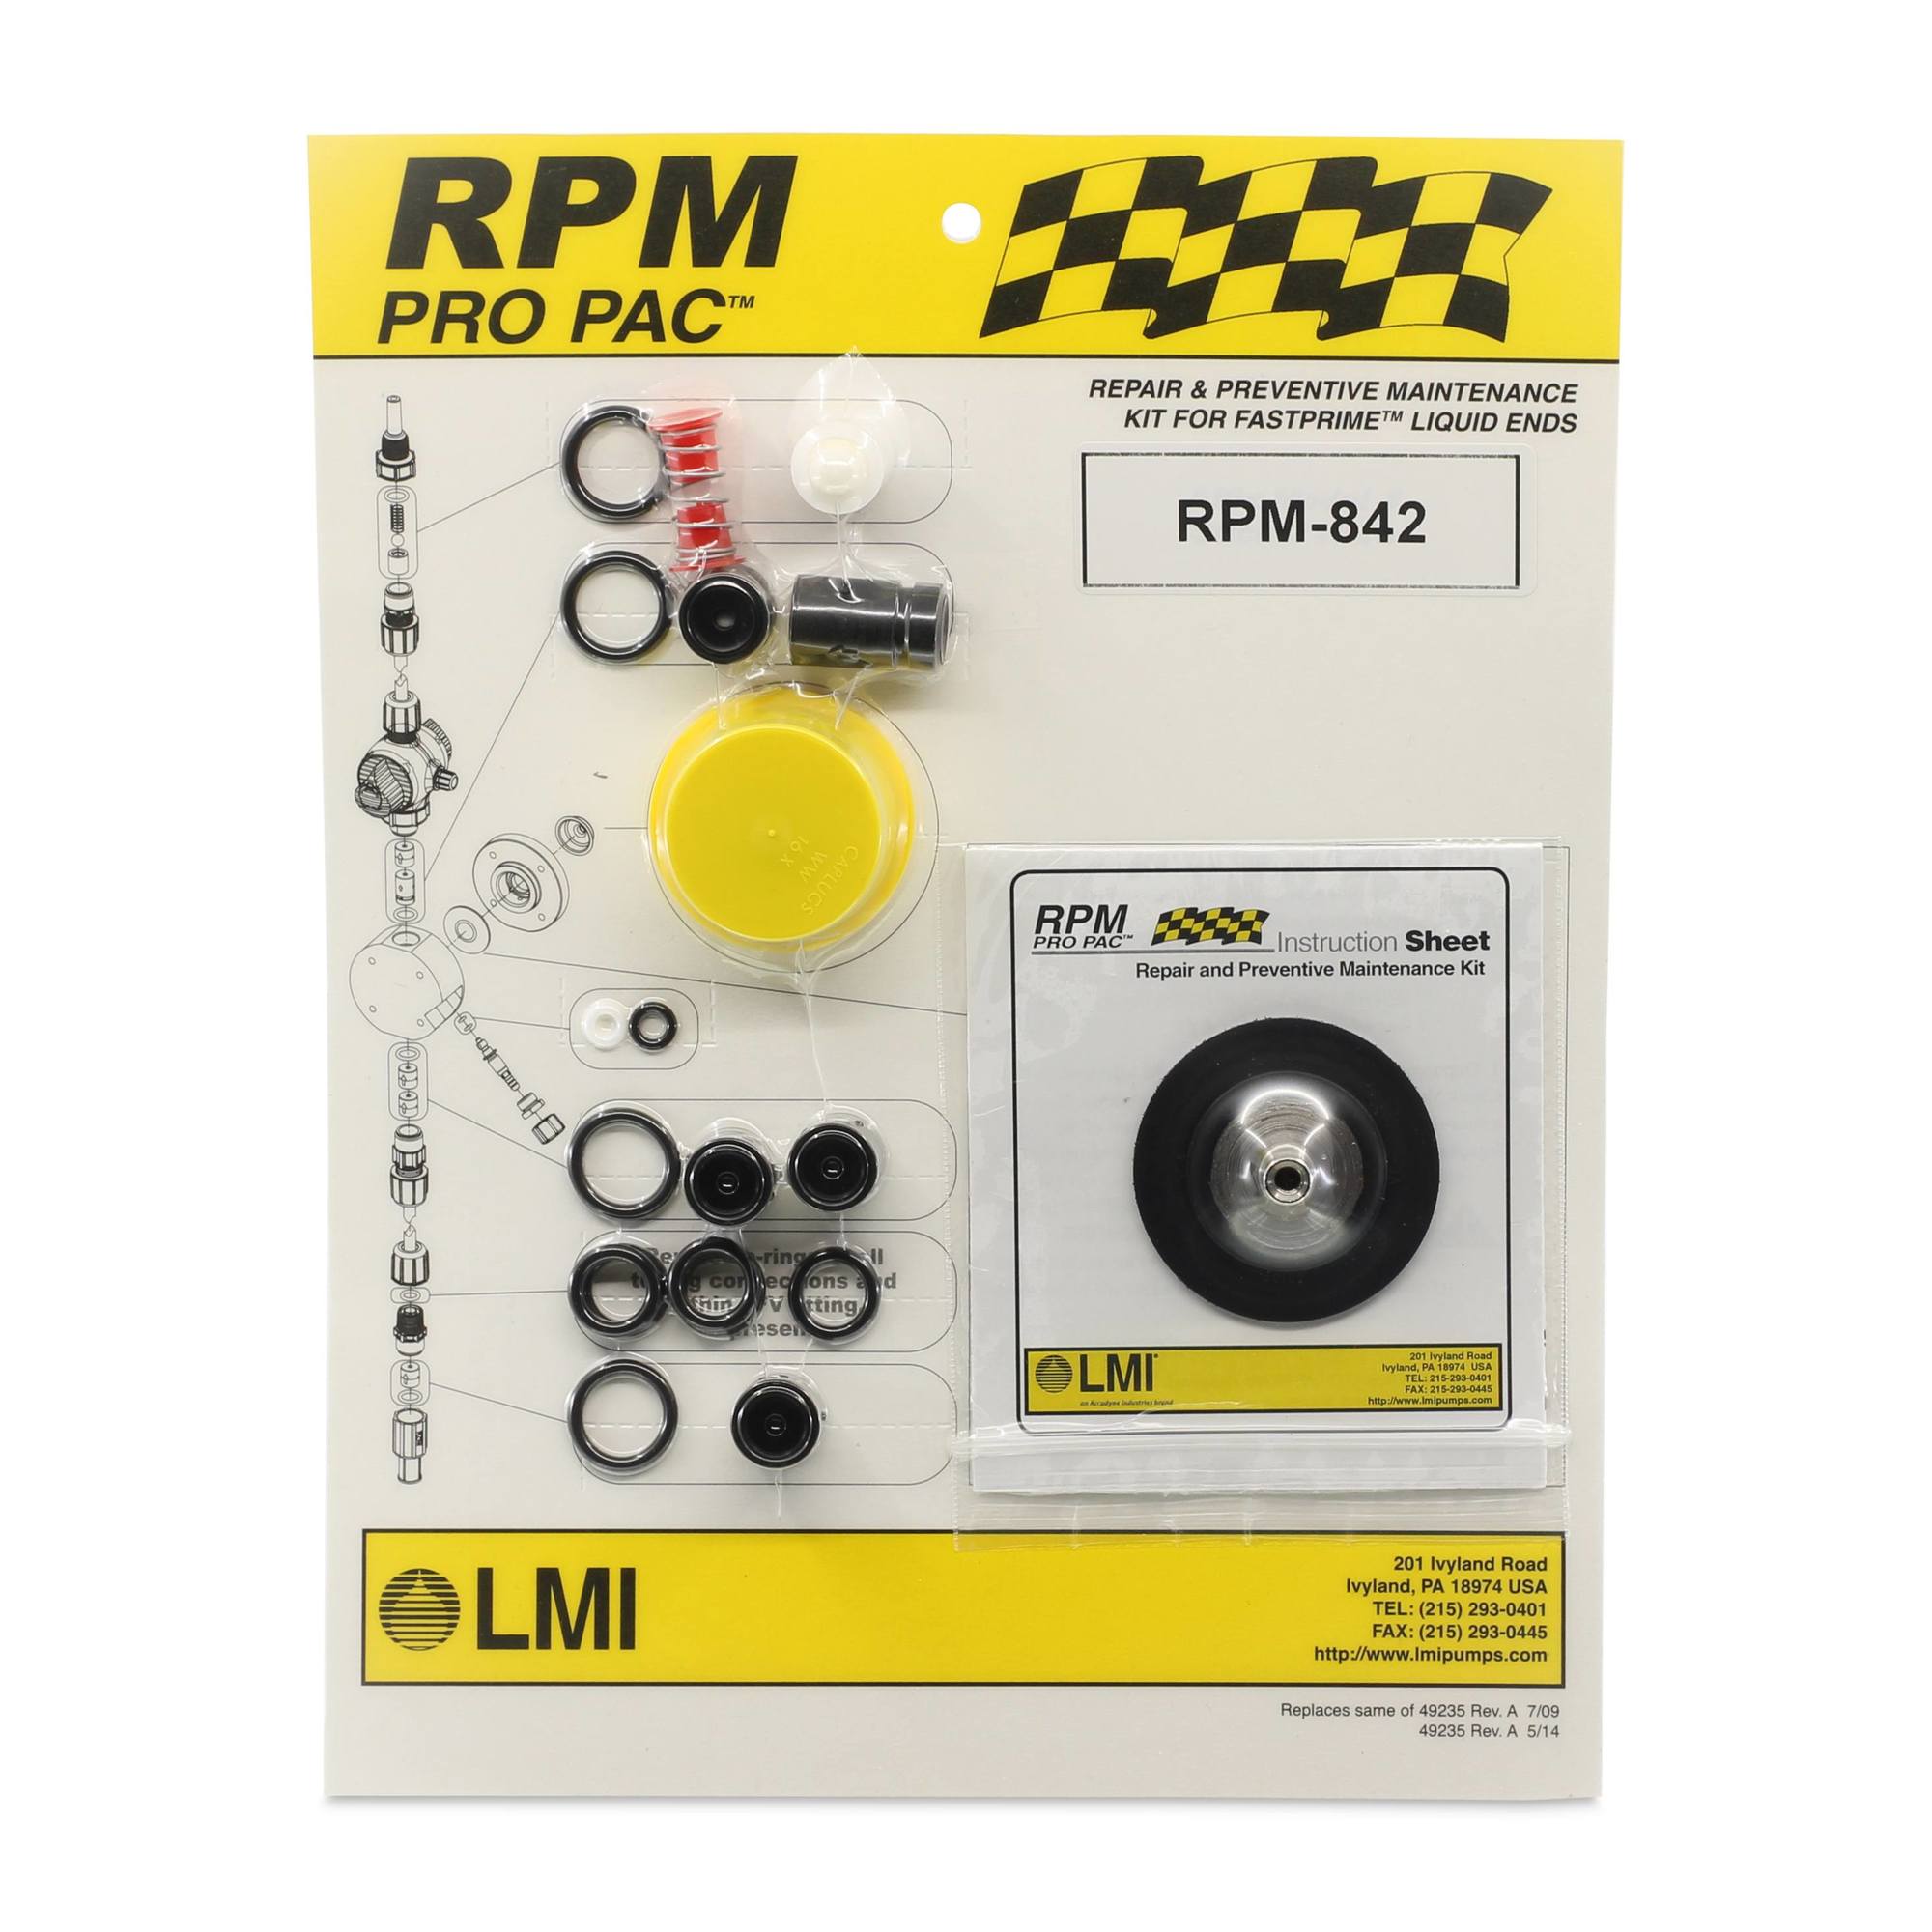 RPM-842 LMIPumps Accessories